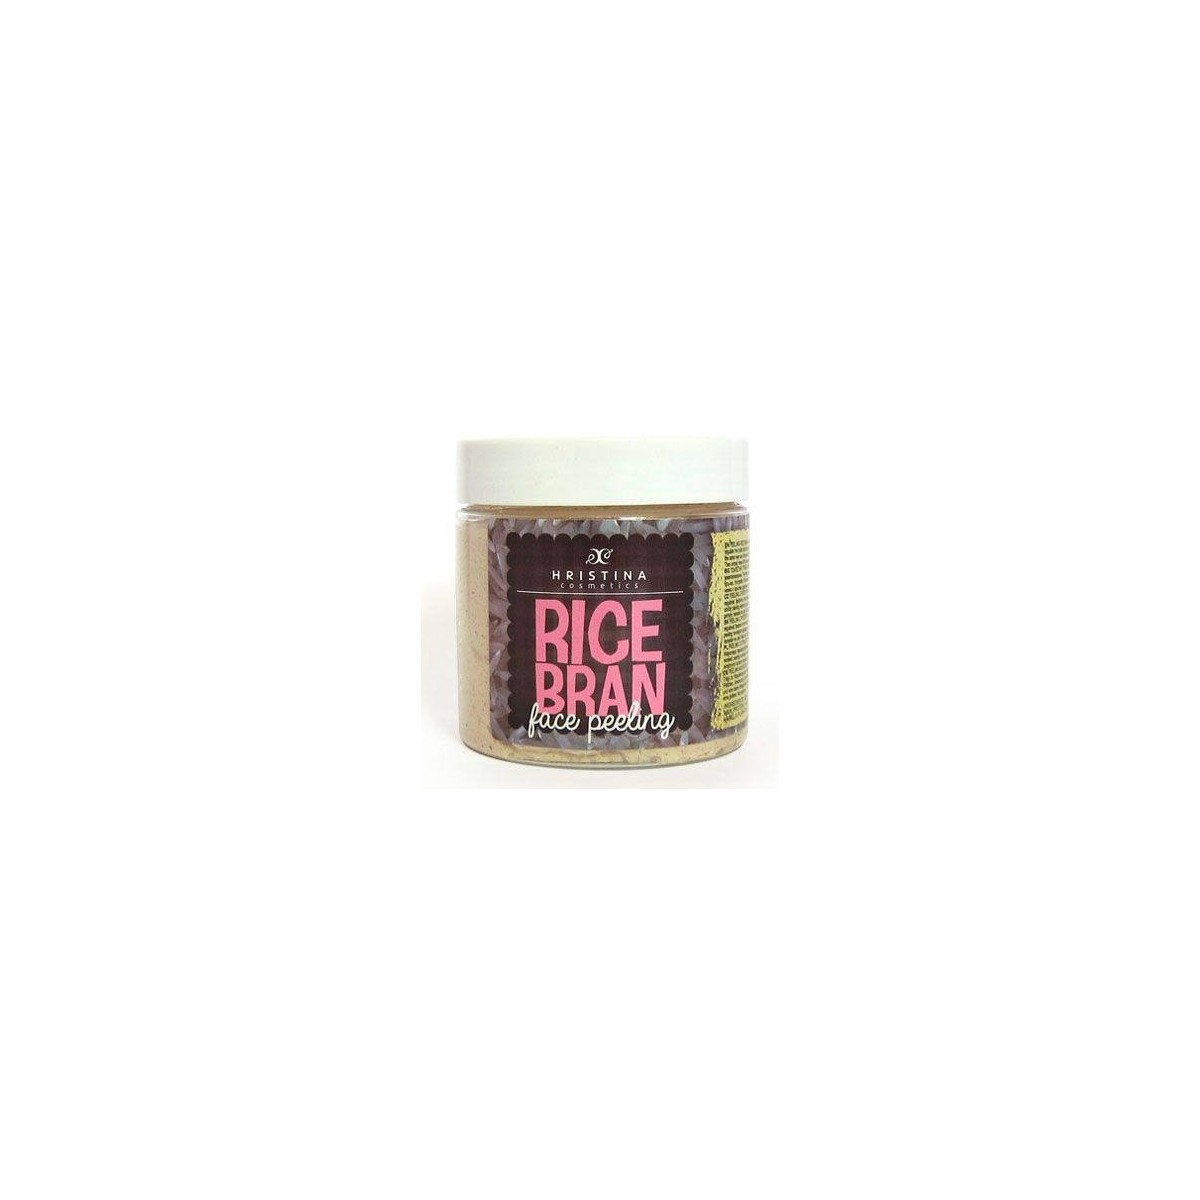 Peeling - Cosmética Natural al mejor precio: Exfoliante facial iluminador de arroz 200ml de Hristina Cosmetics en Skin Thinks - Piel Seca